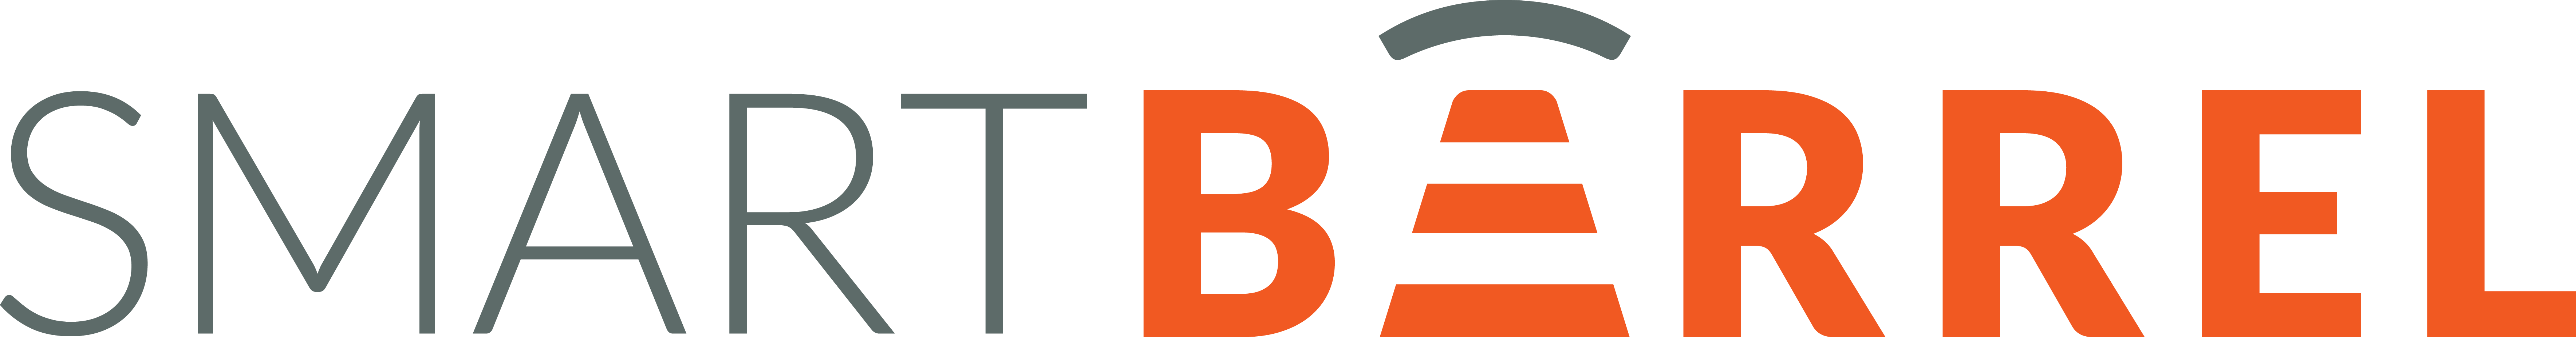 SmartBarrel logo